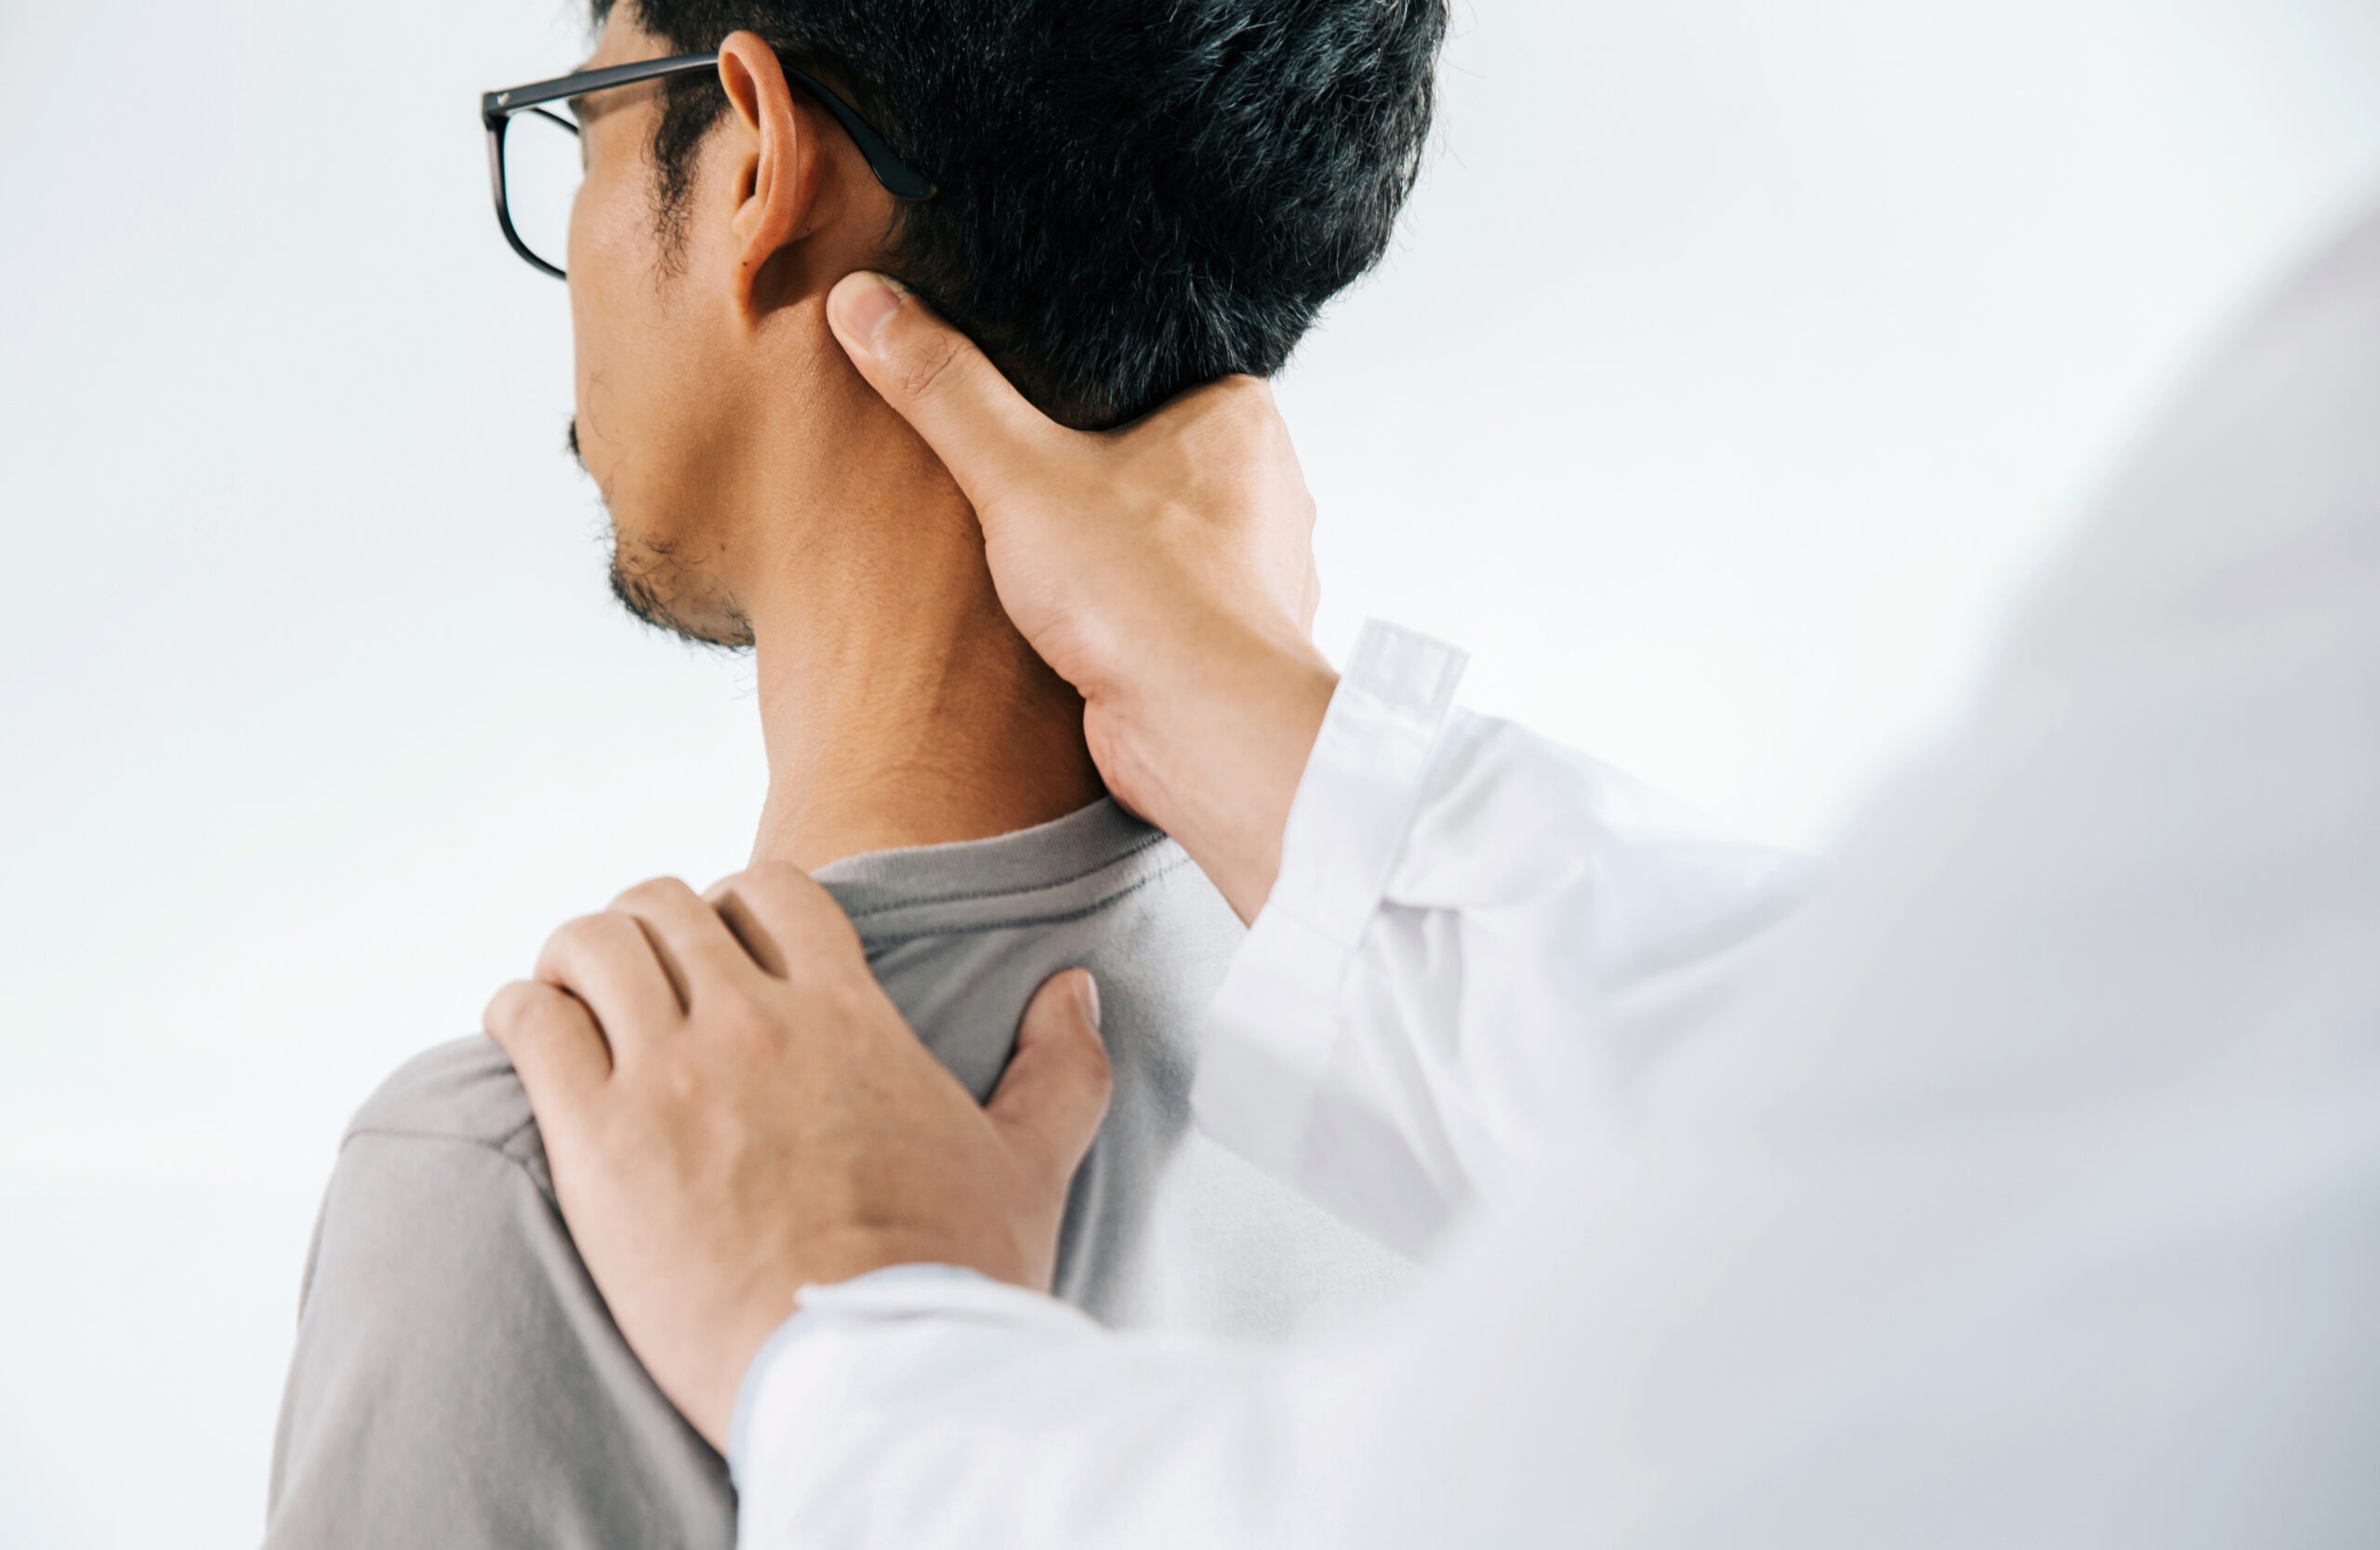 Physiotherapist doing healing treatment on man's neck,Chiropract